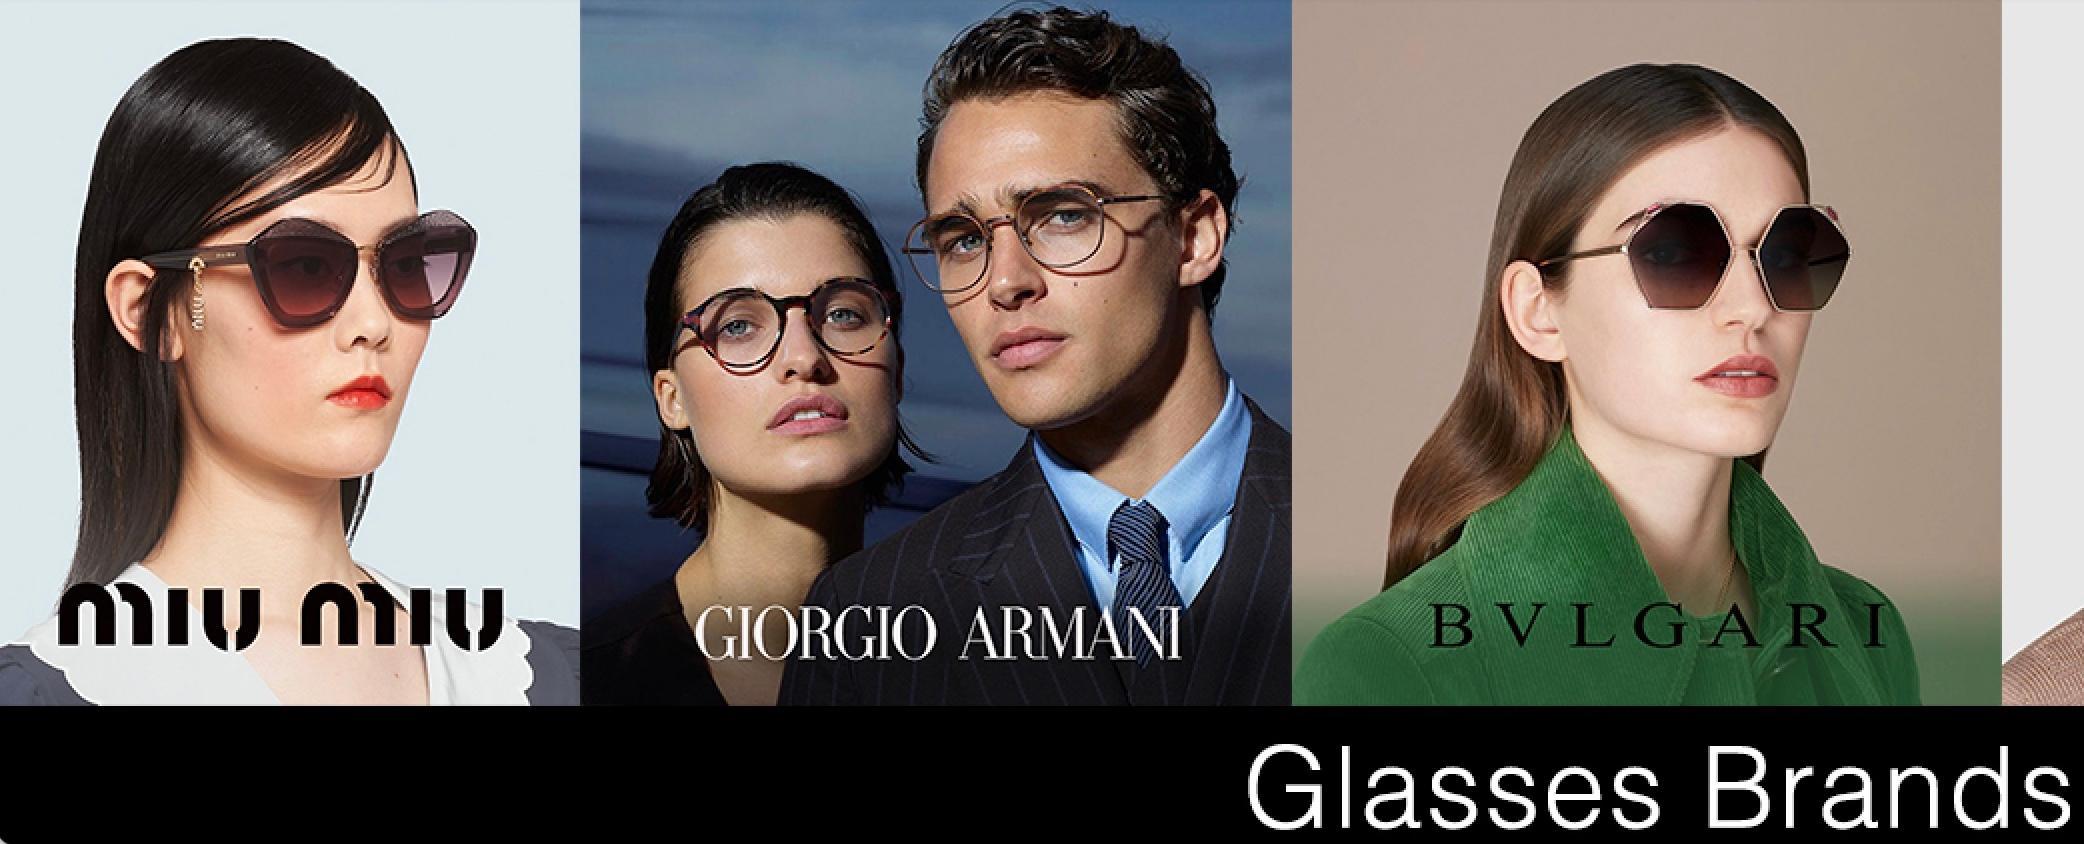 All Eyeglasses and Frames